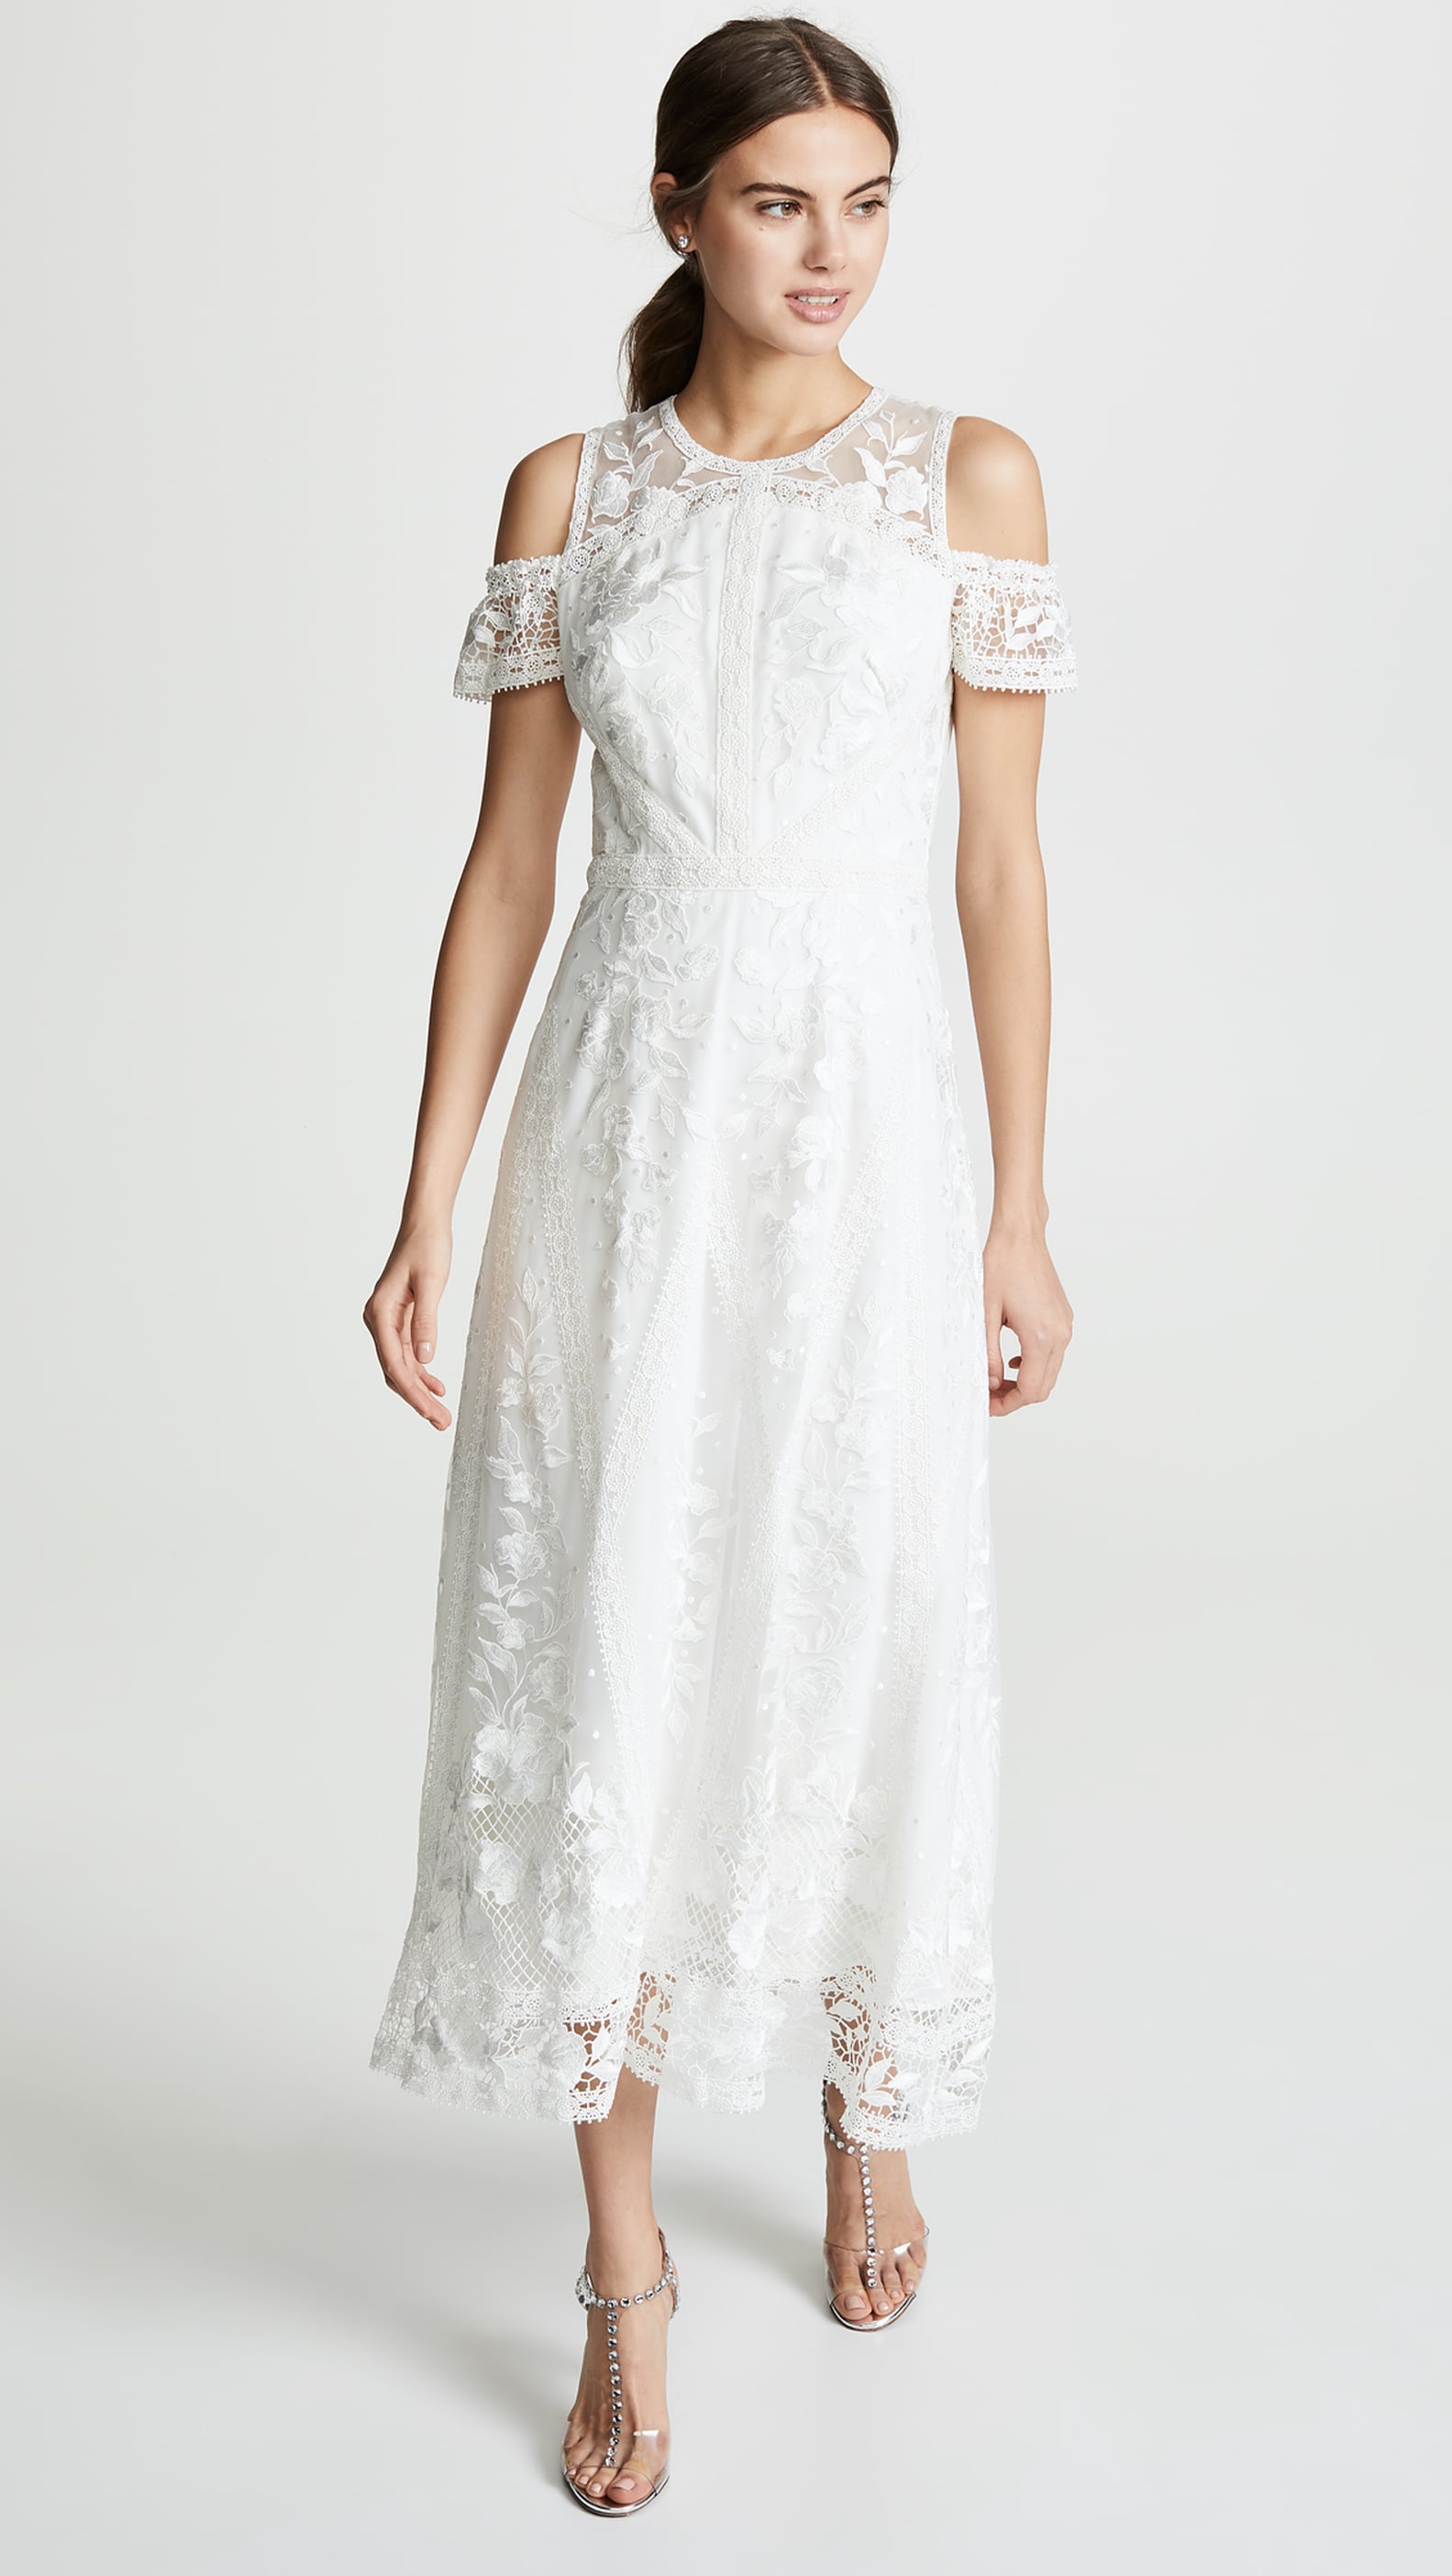 Affordable Wedding Dresses From Shopbop | POPSUGAR Fashion